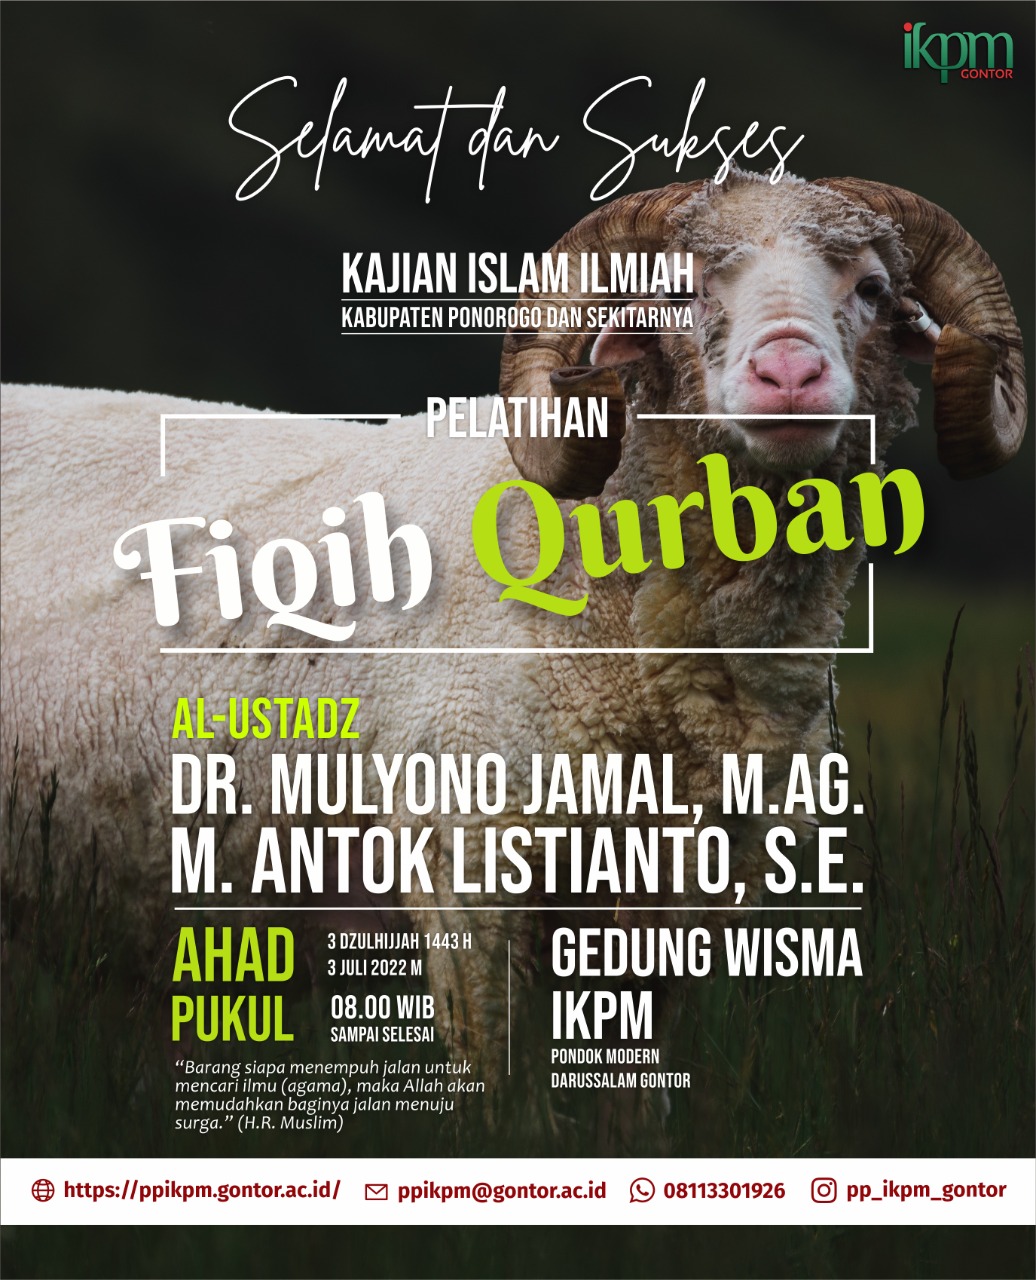 Pelatihan Fiqh Qurban, Sebagai Ajang Silaturahmi Takmir Masjid Se-Kabupaten Ponorogo